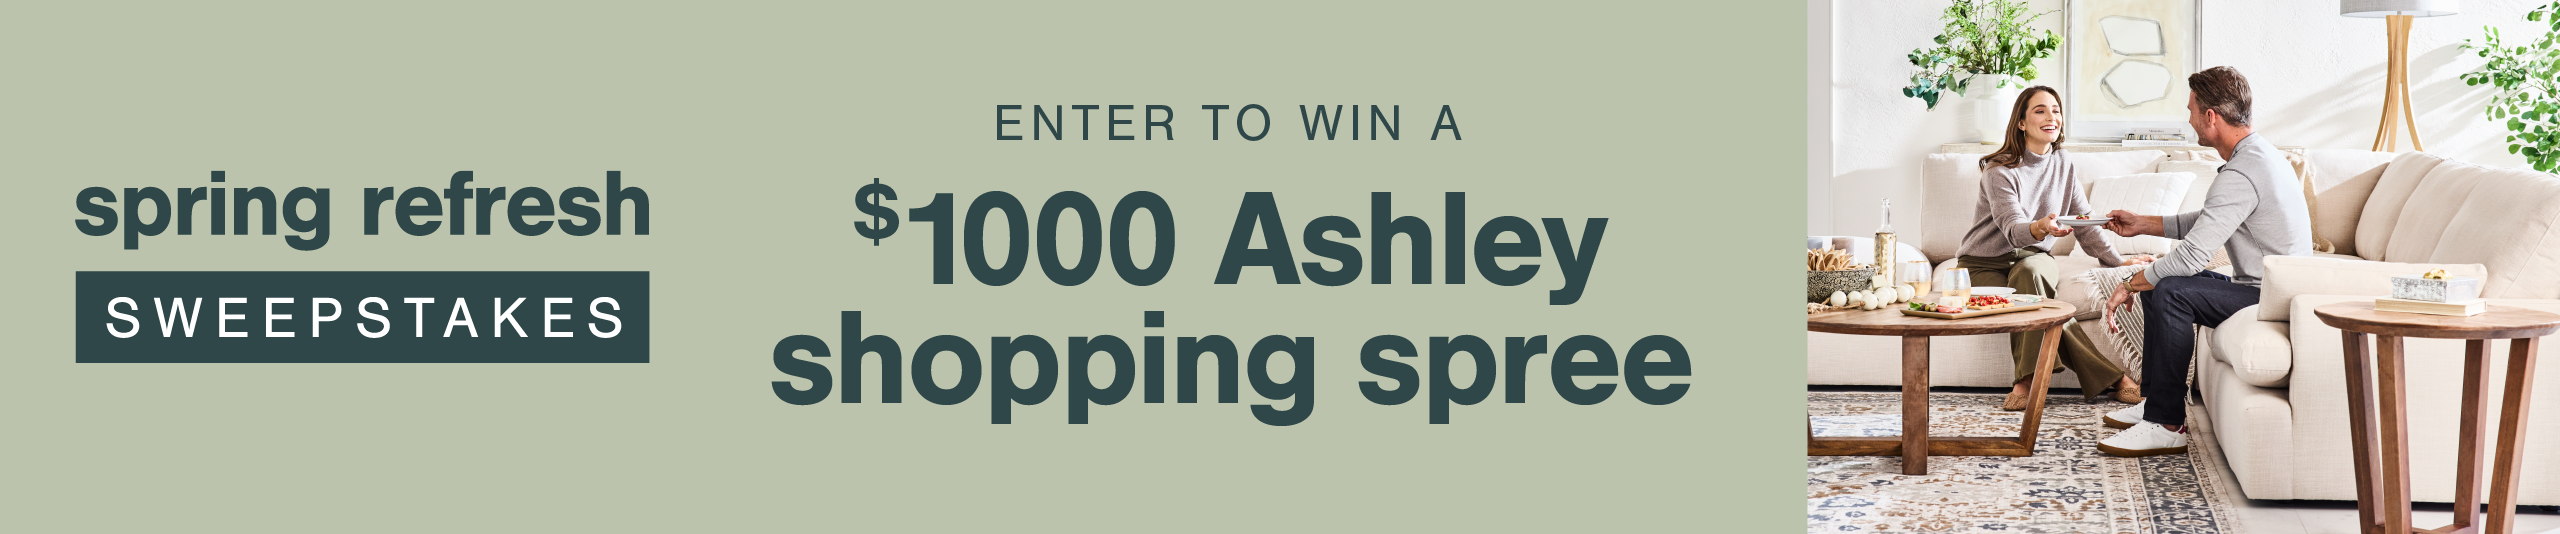 spring refresh sweepstakes ENTER TO WIN A $1000 Ashley shopping spree